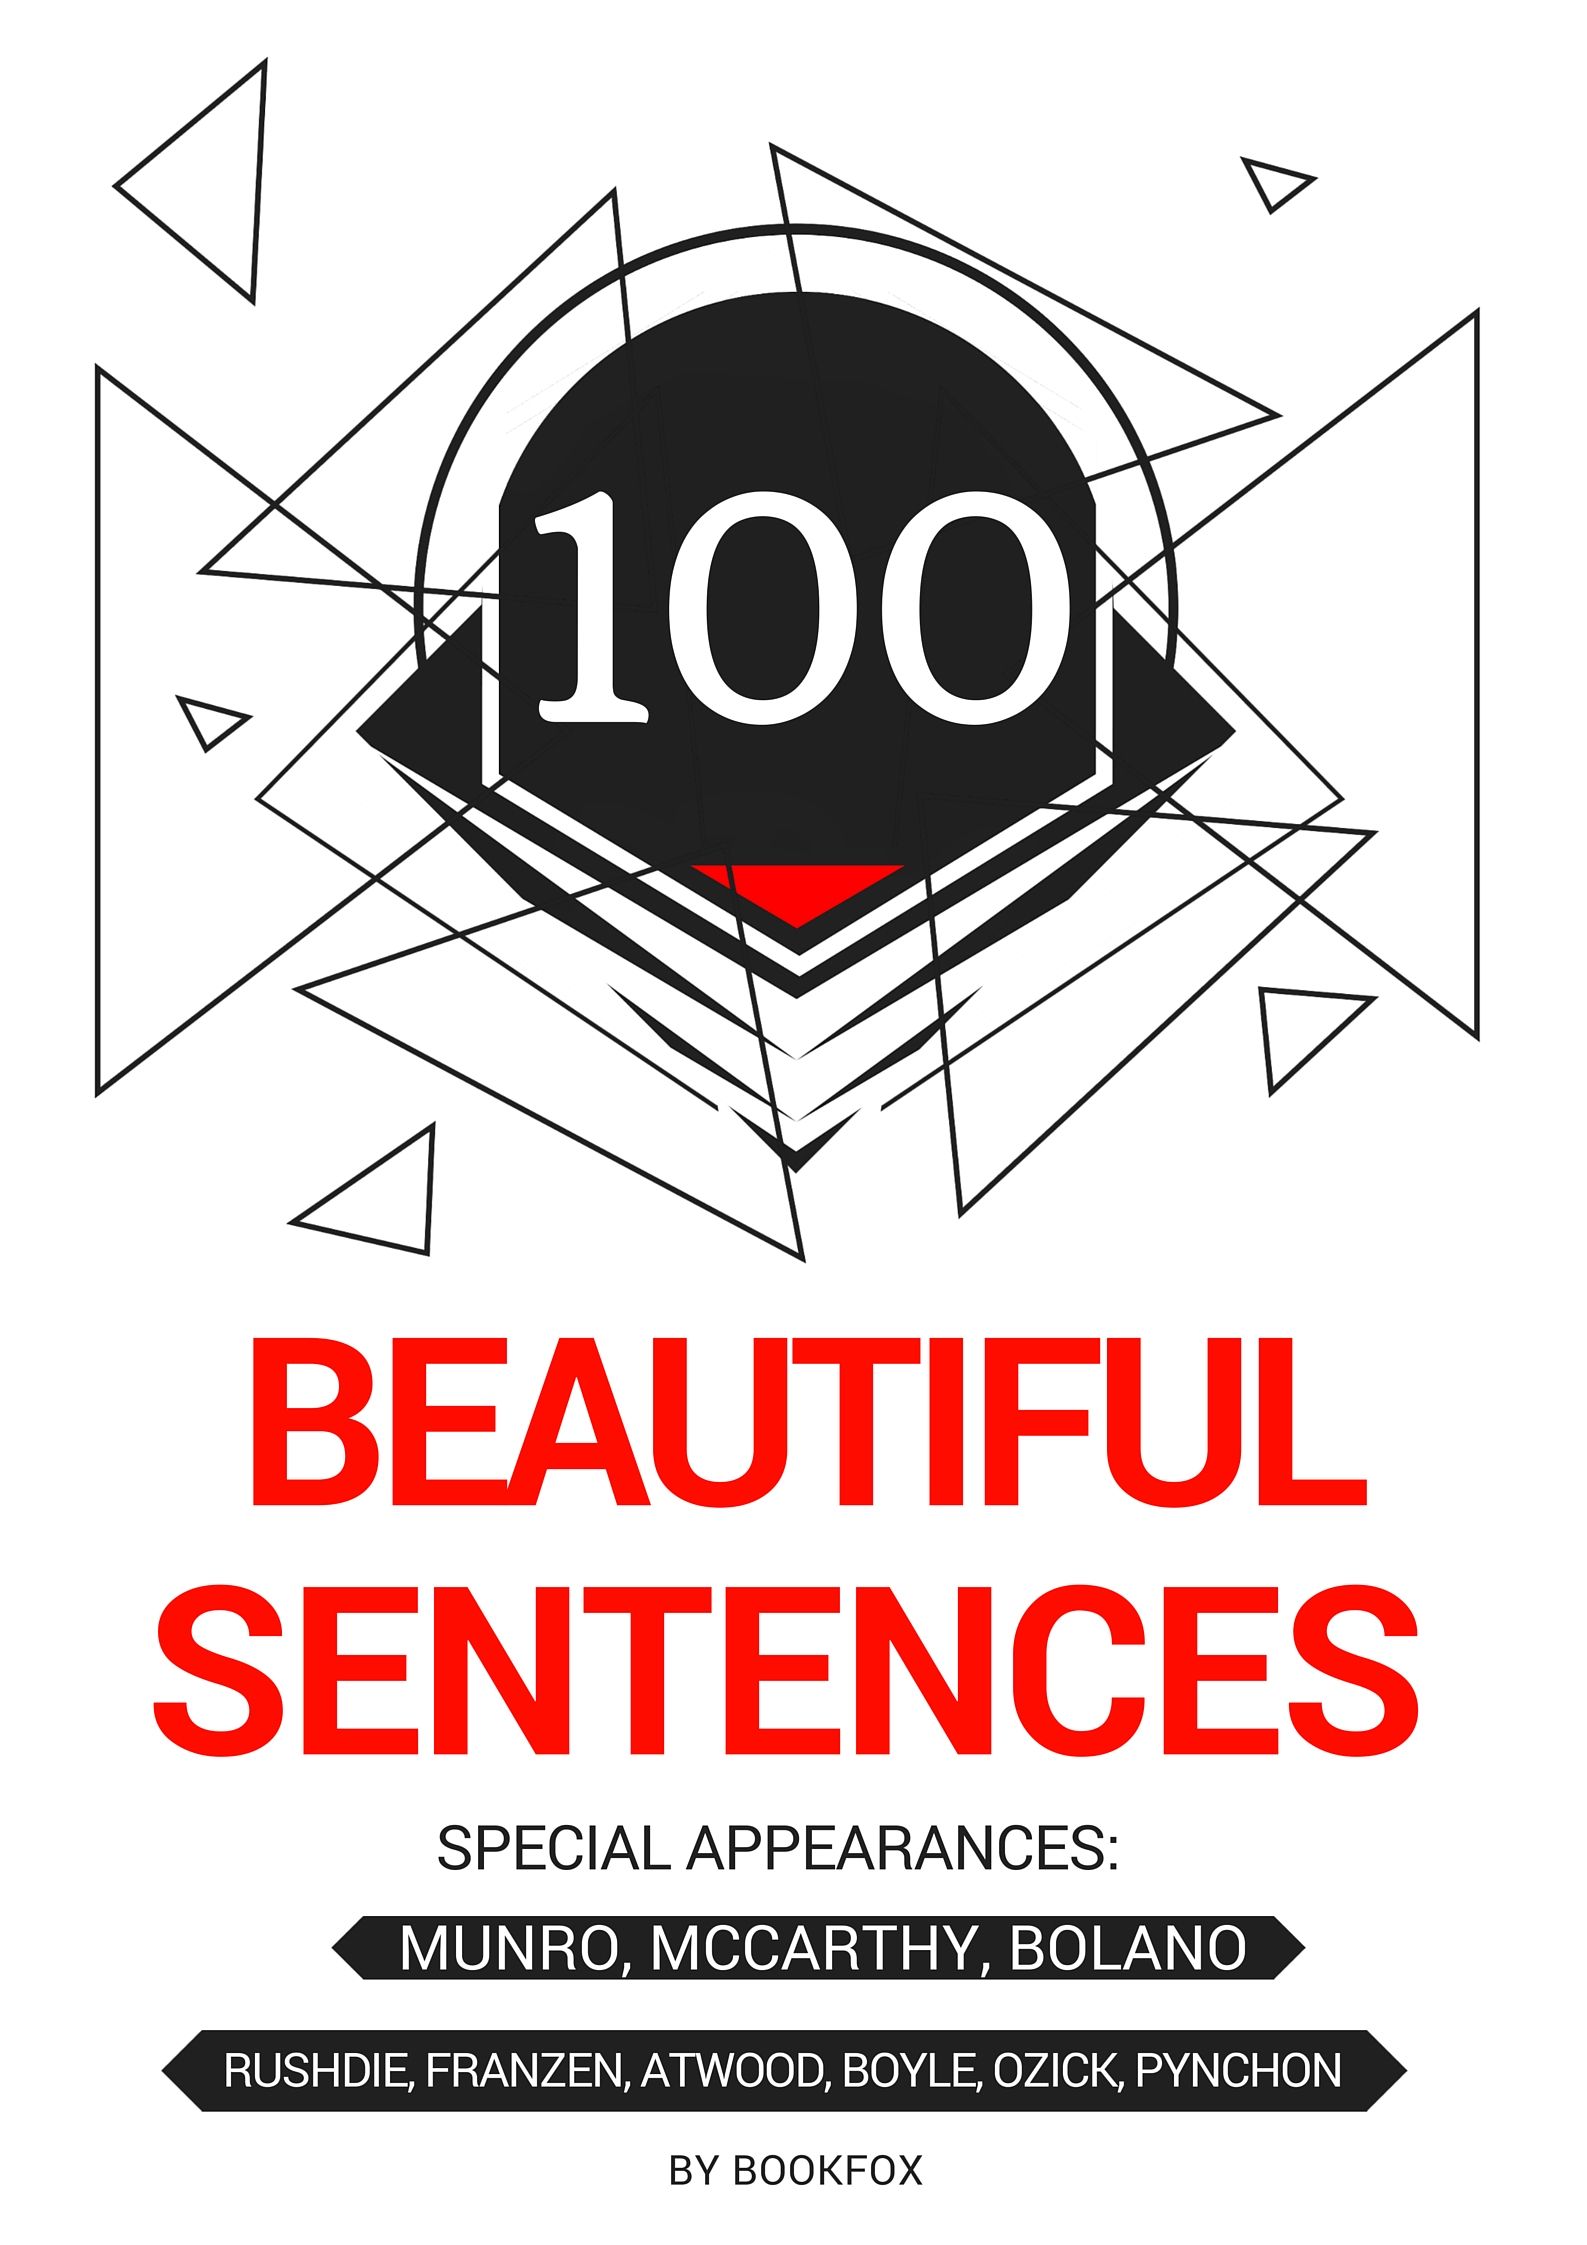 100 Incredibly Beautiful Sentences In Literature